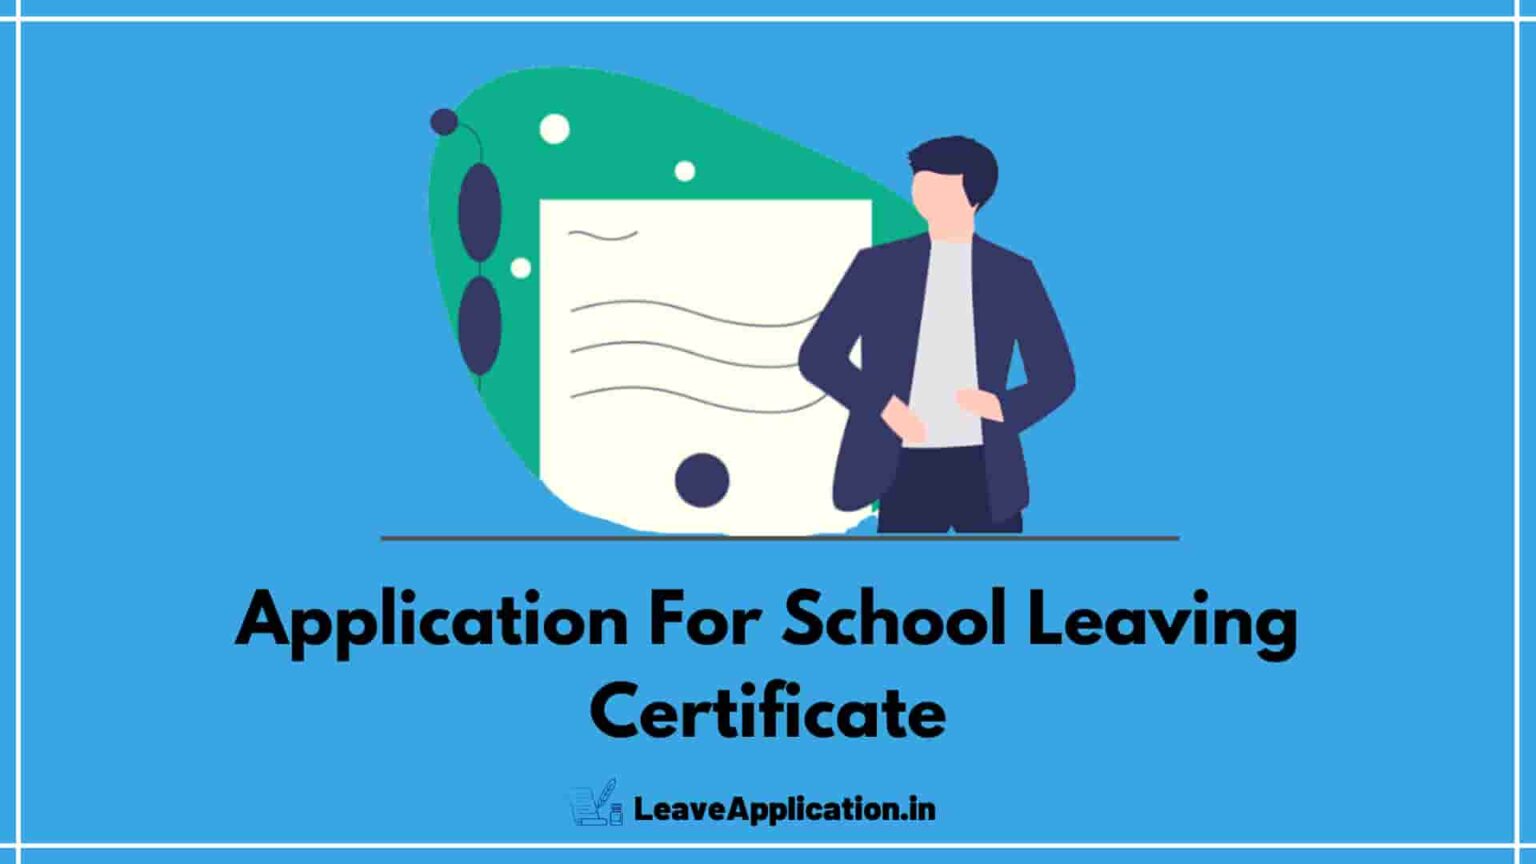 first school leaving certificate